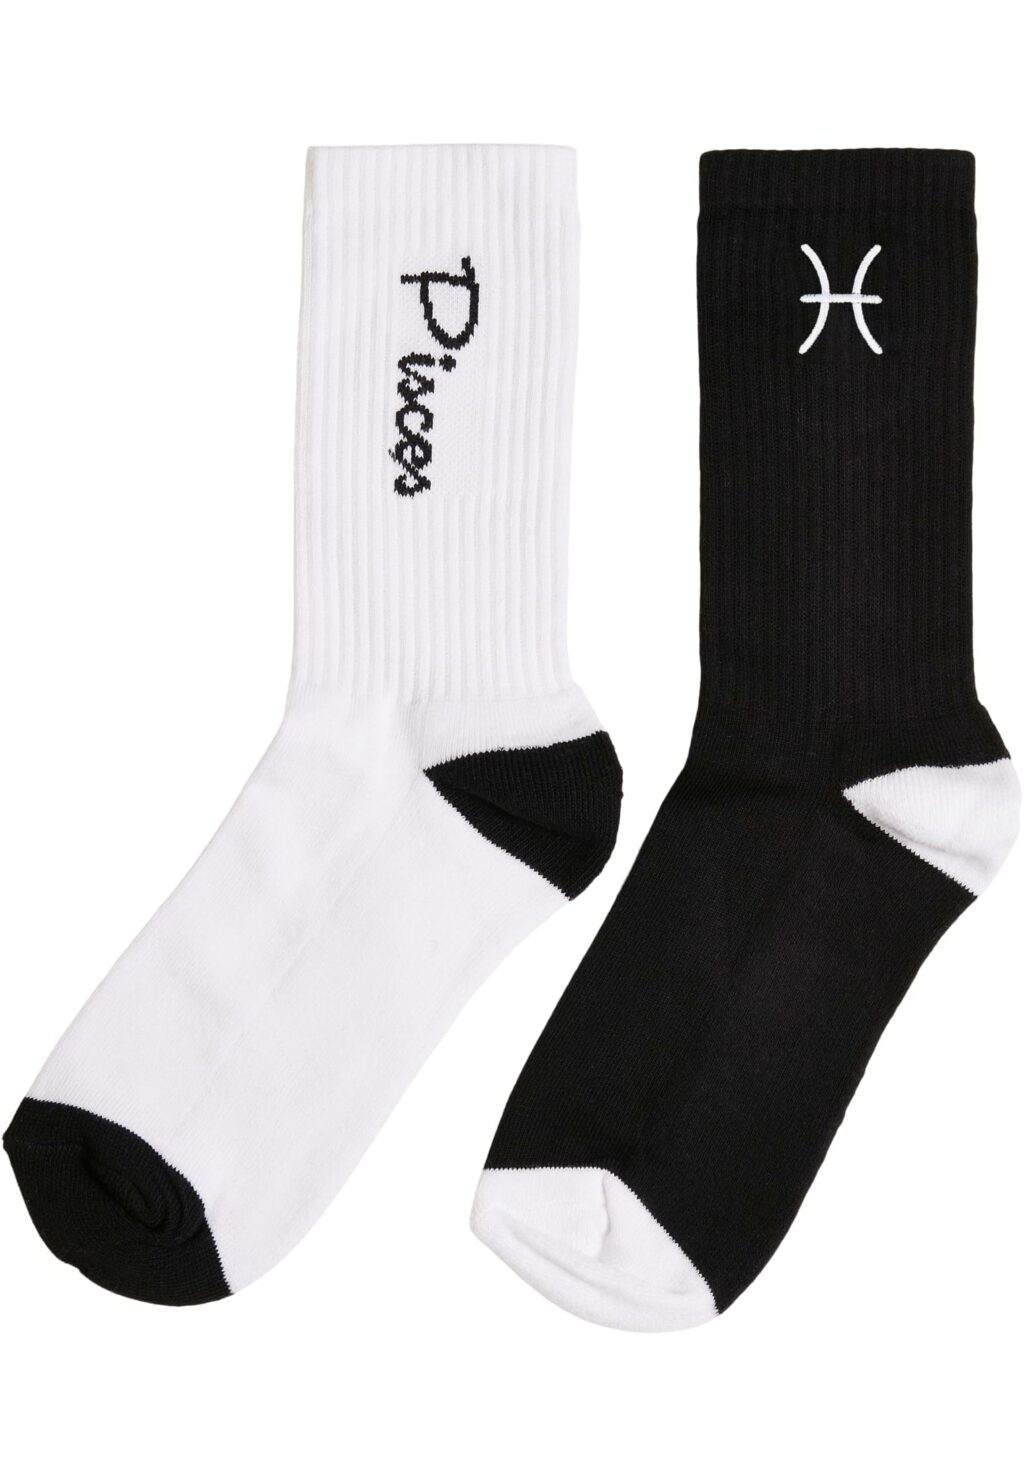 Zodiac Socks 2-Pack black/white pisces MT2235